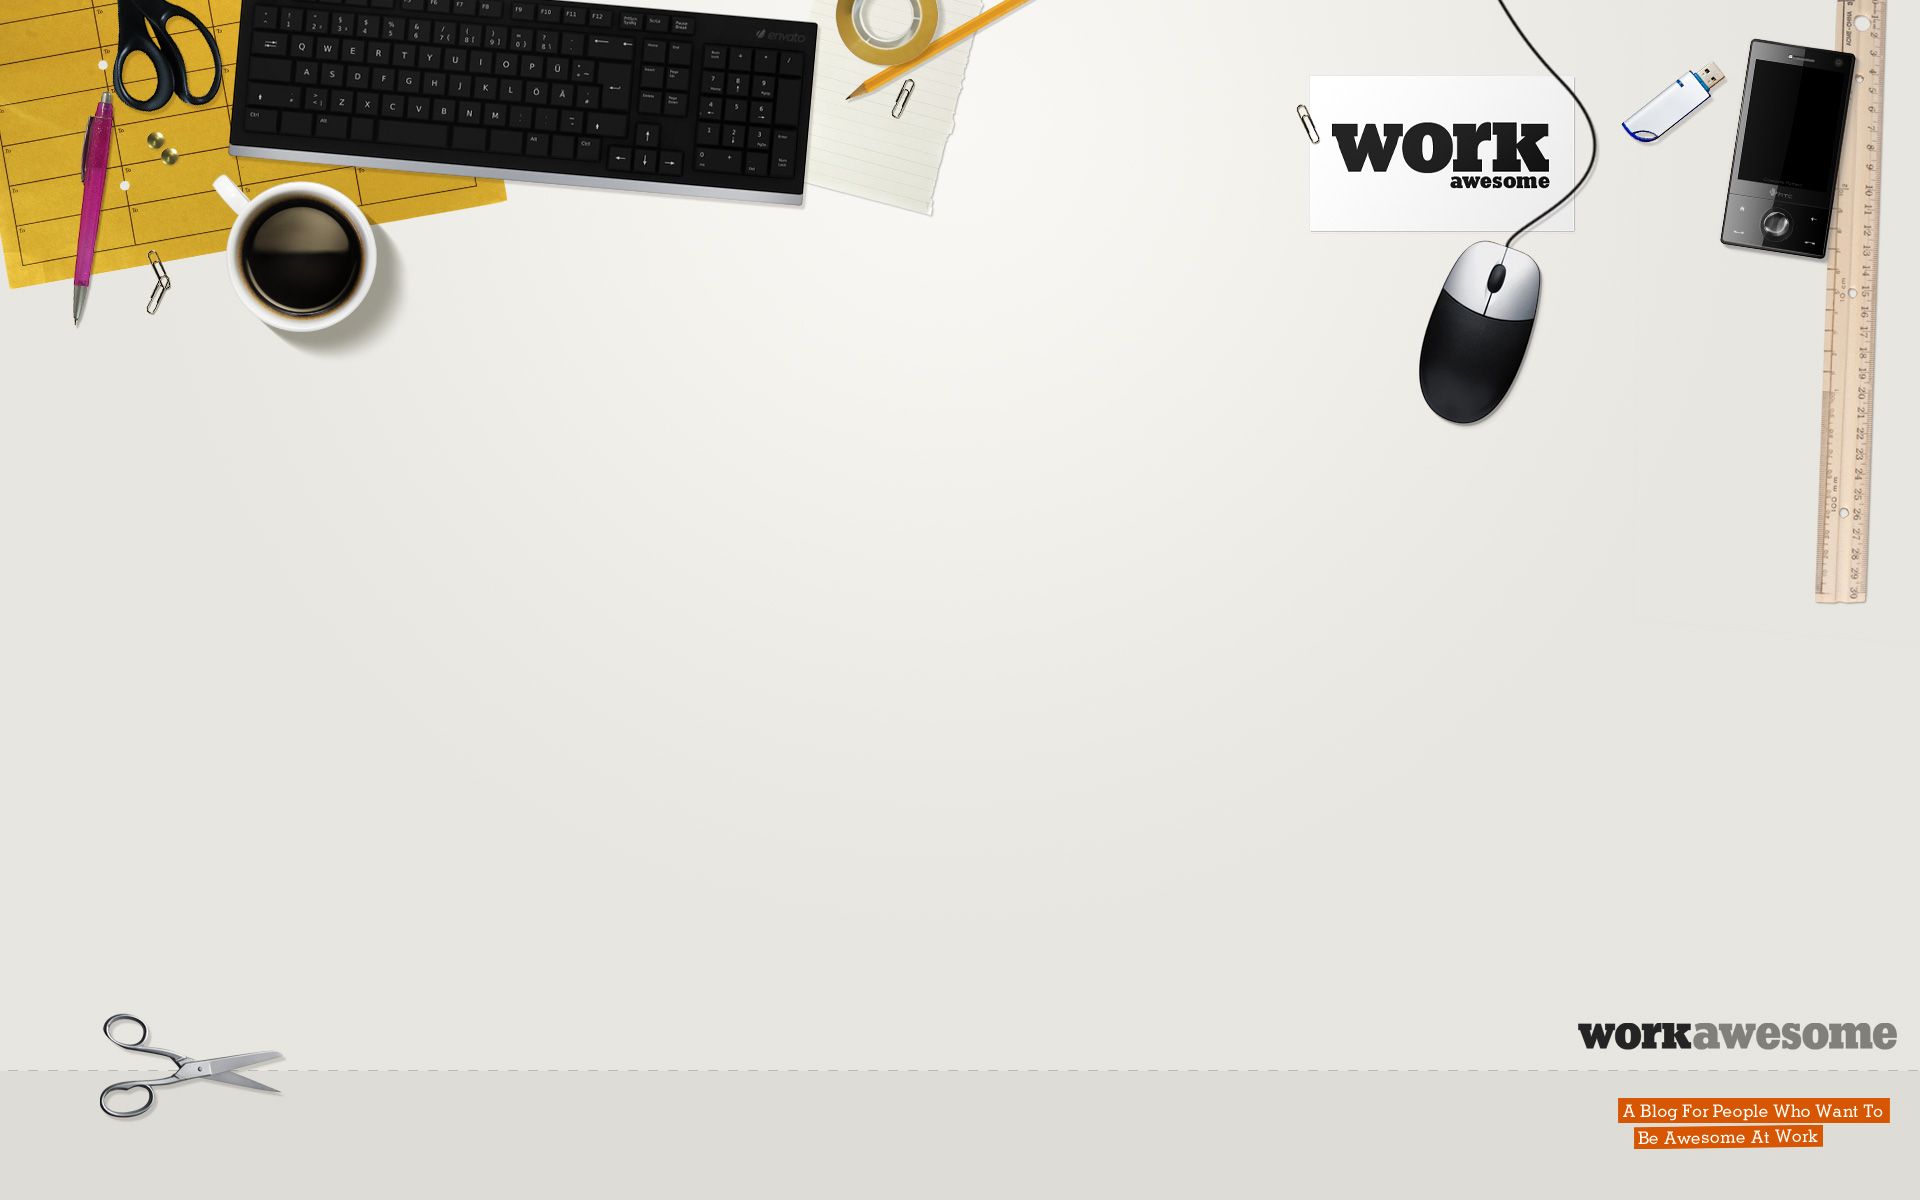 Work Desktop Wallpapers On Wallpaperdog, Small Work Computer Desktop Backgrounds